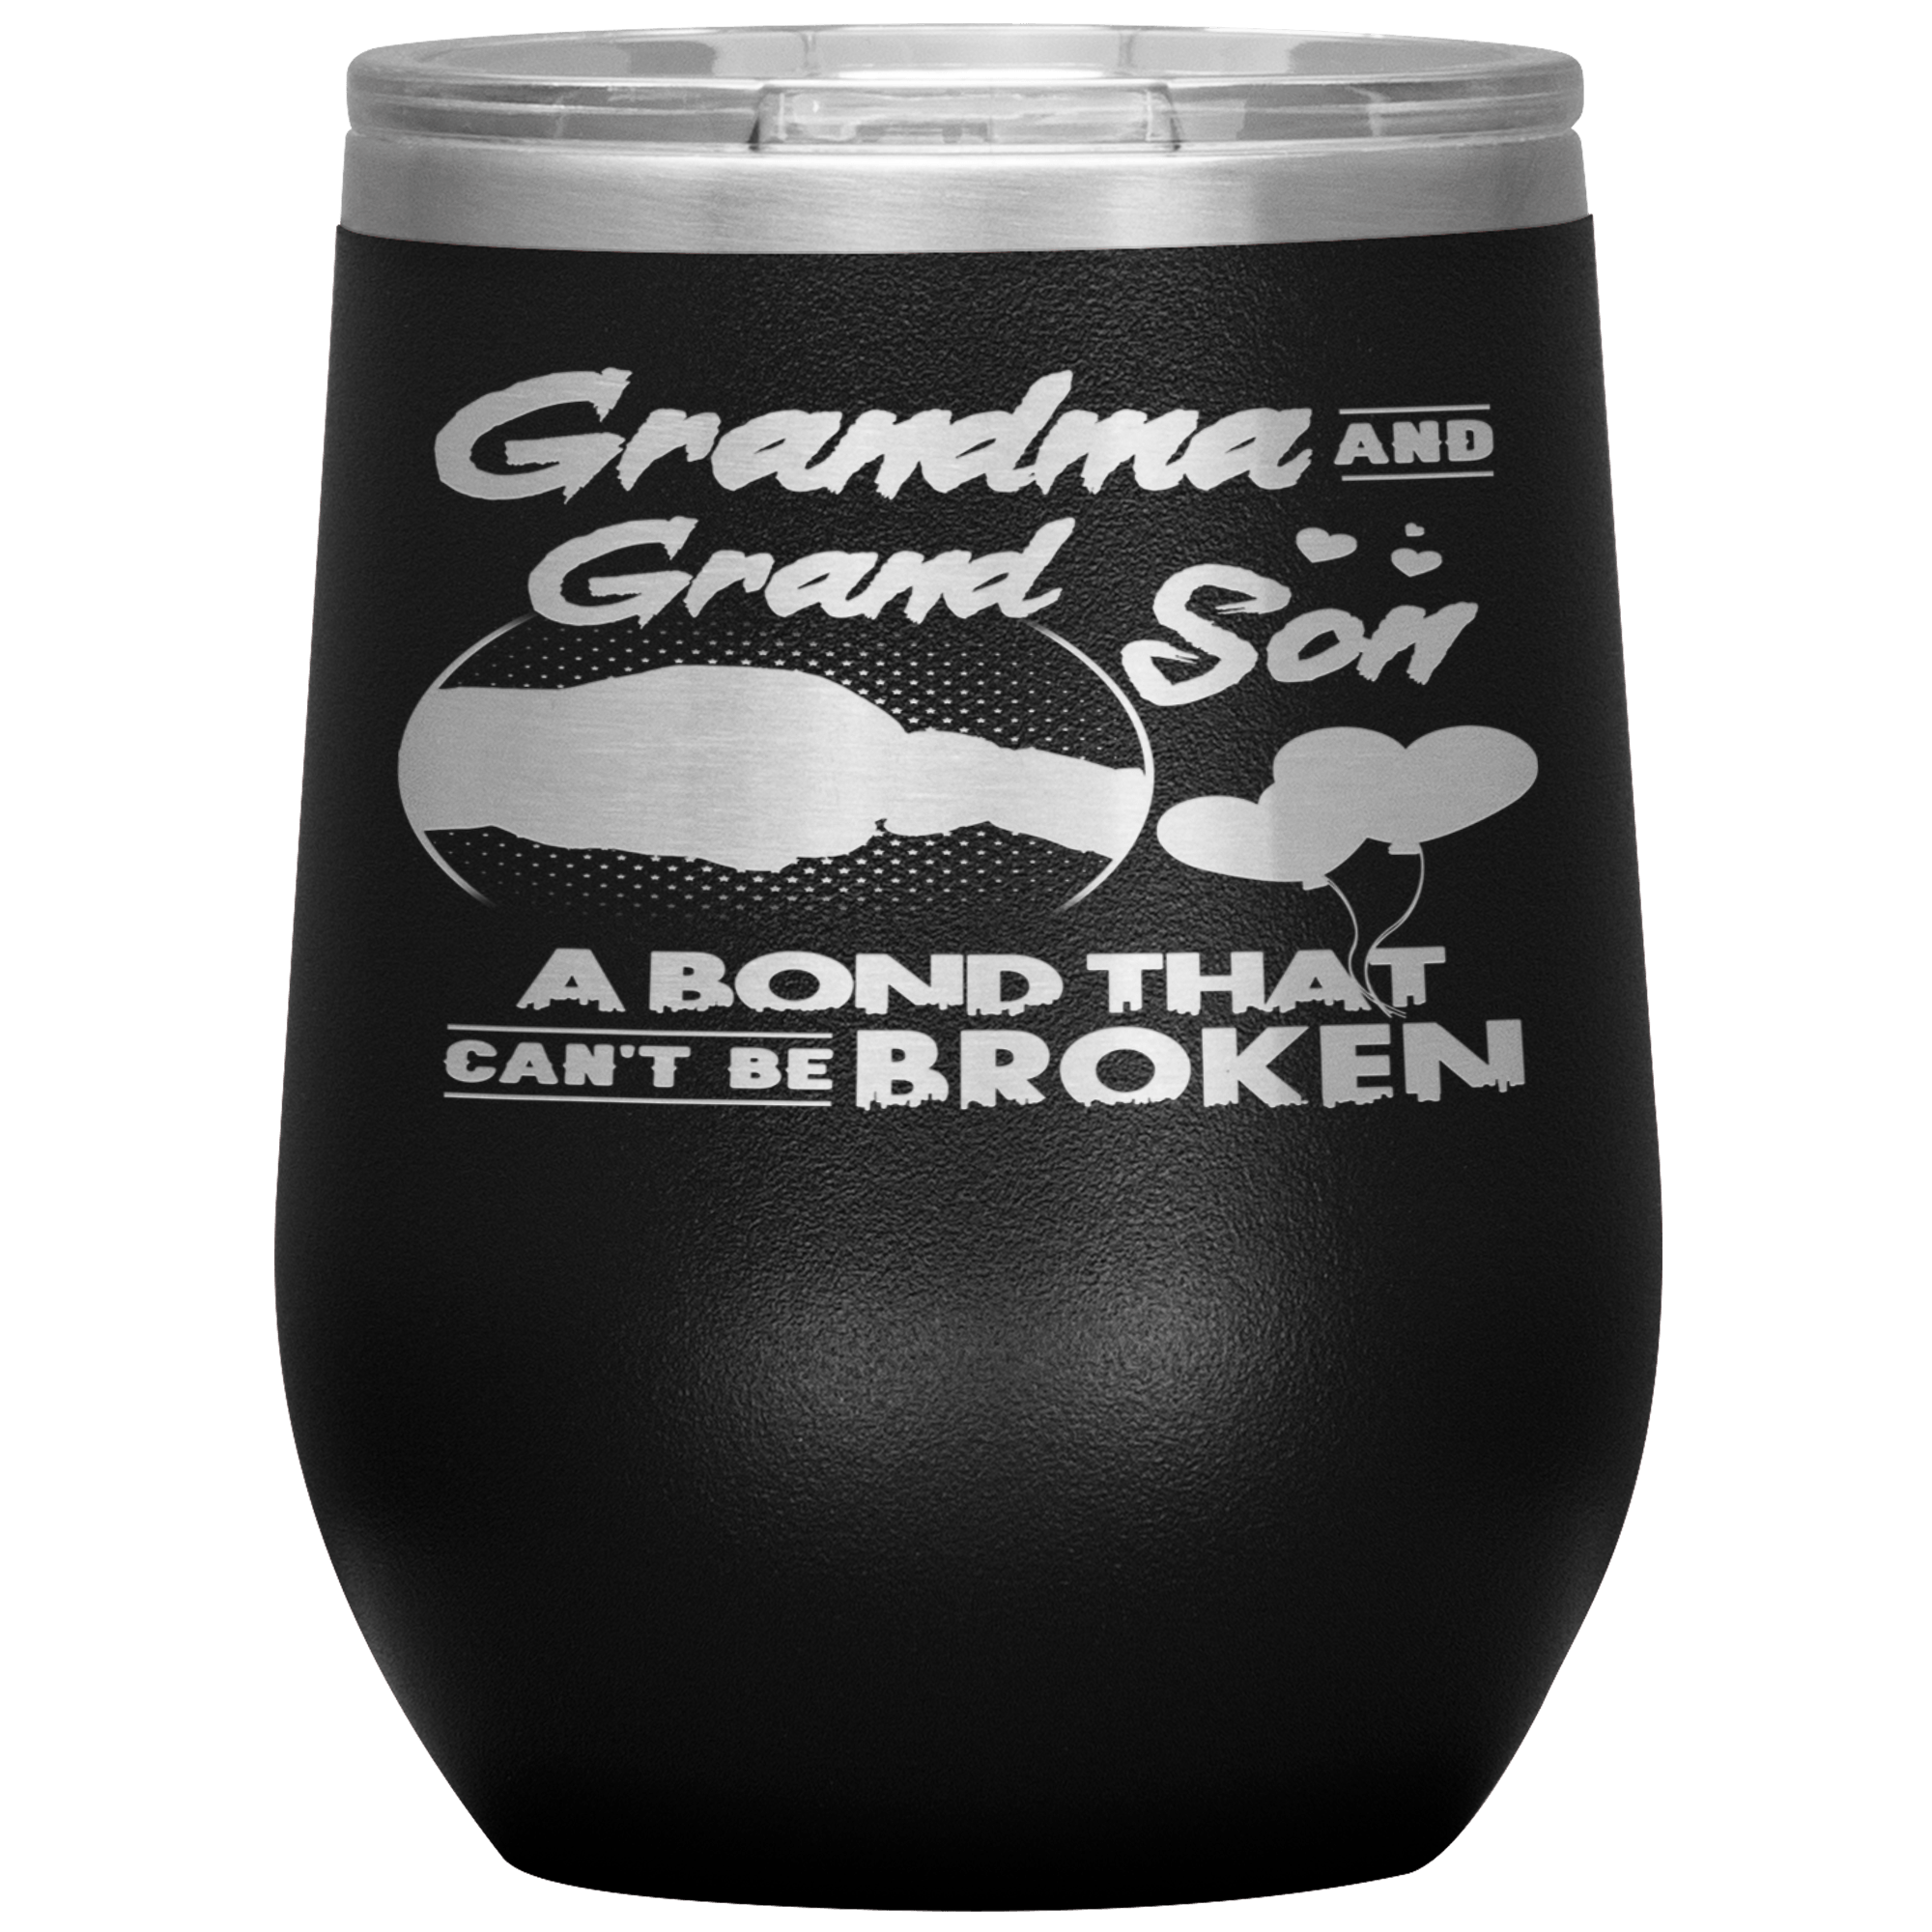 "Grandma and grandson A bond that can't be broken" Wine Tumbler